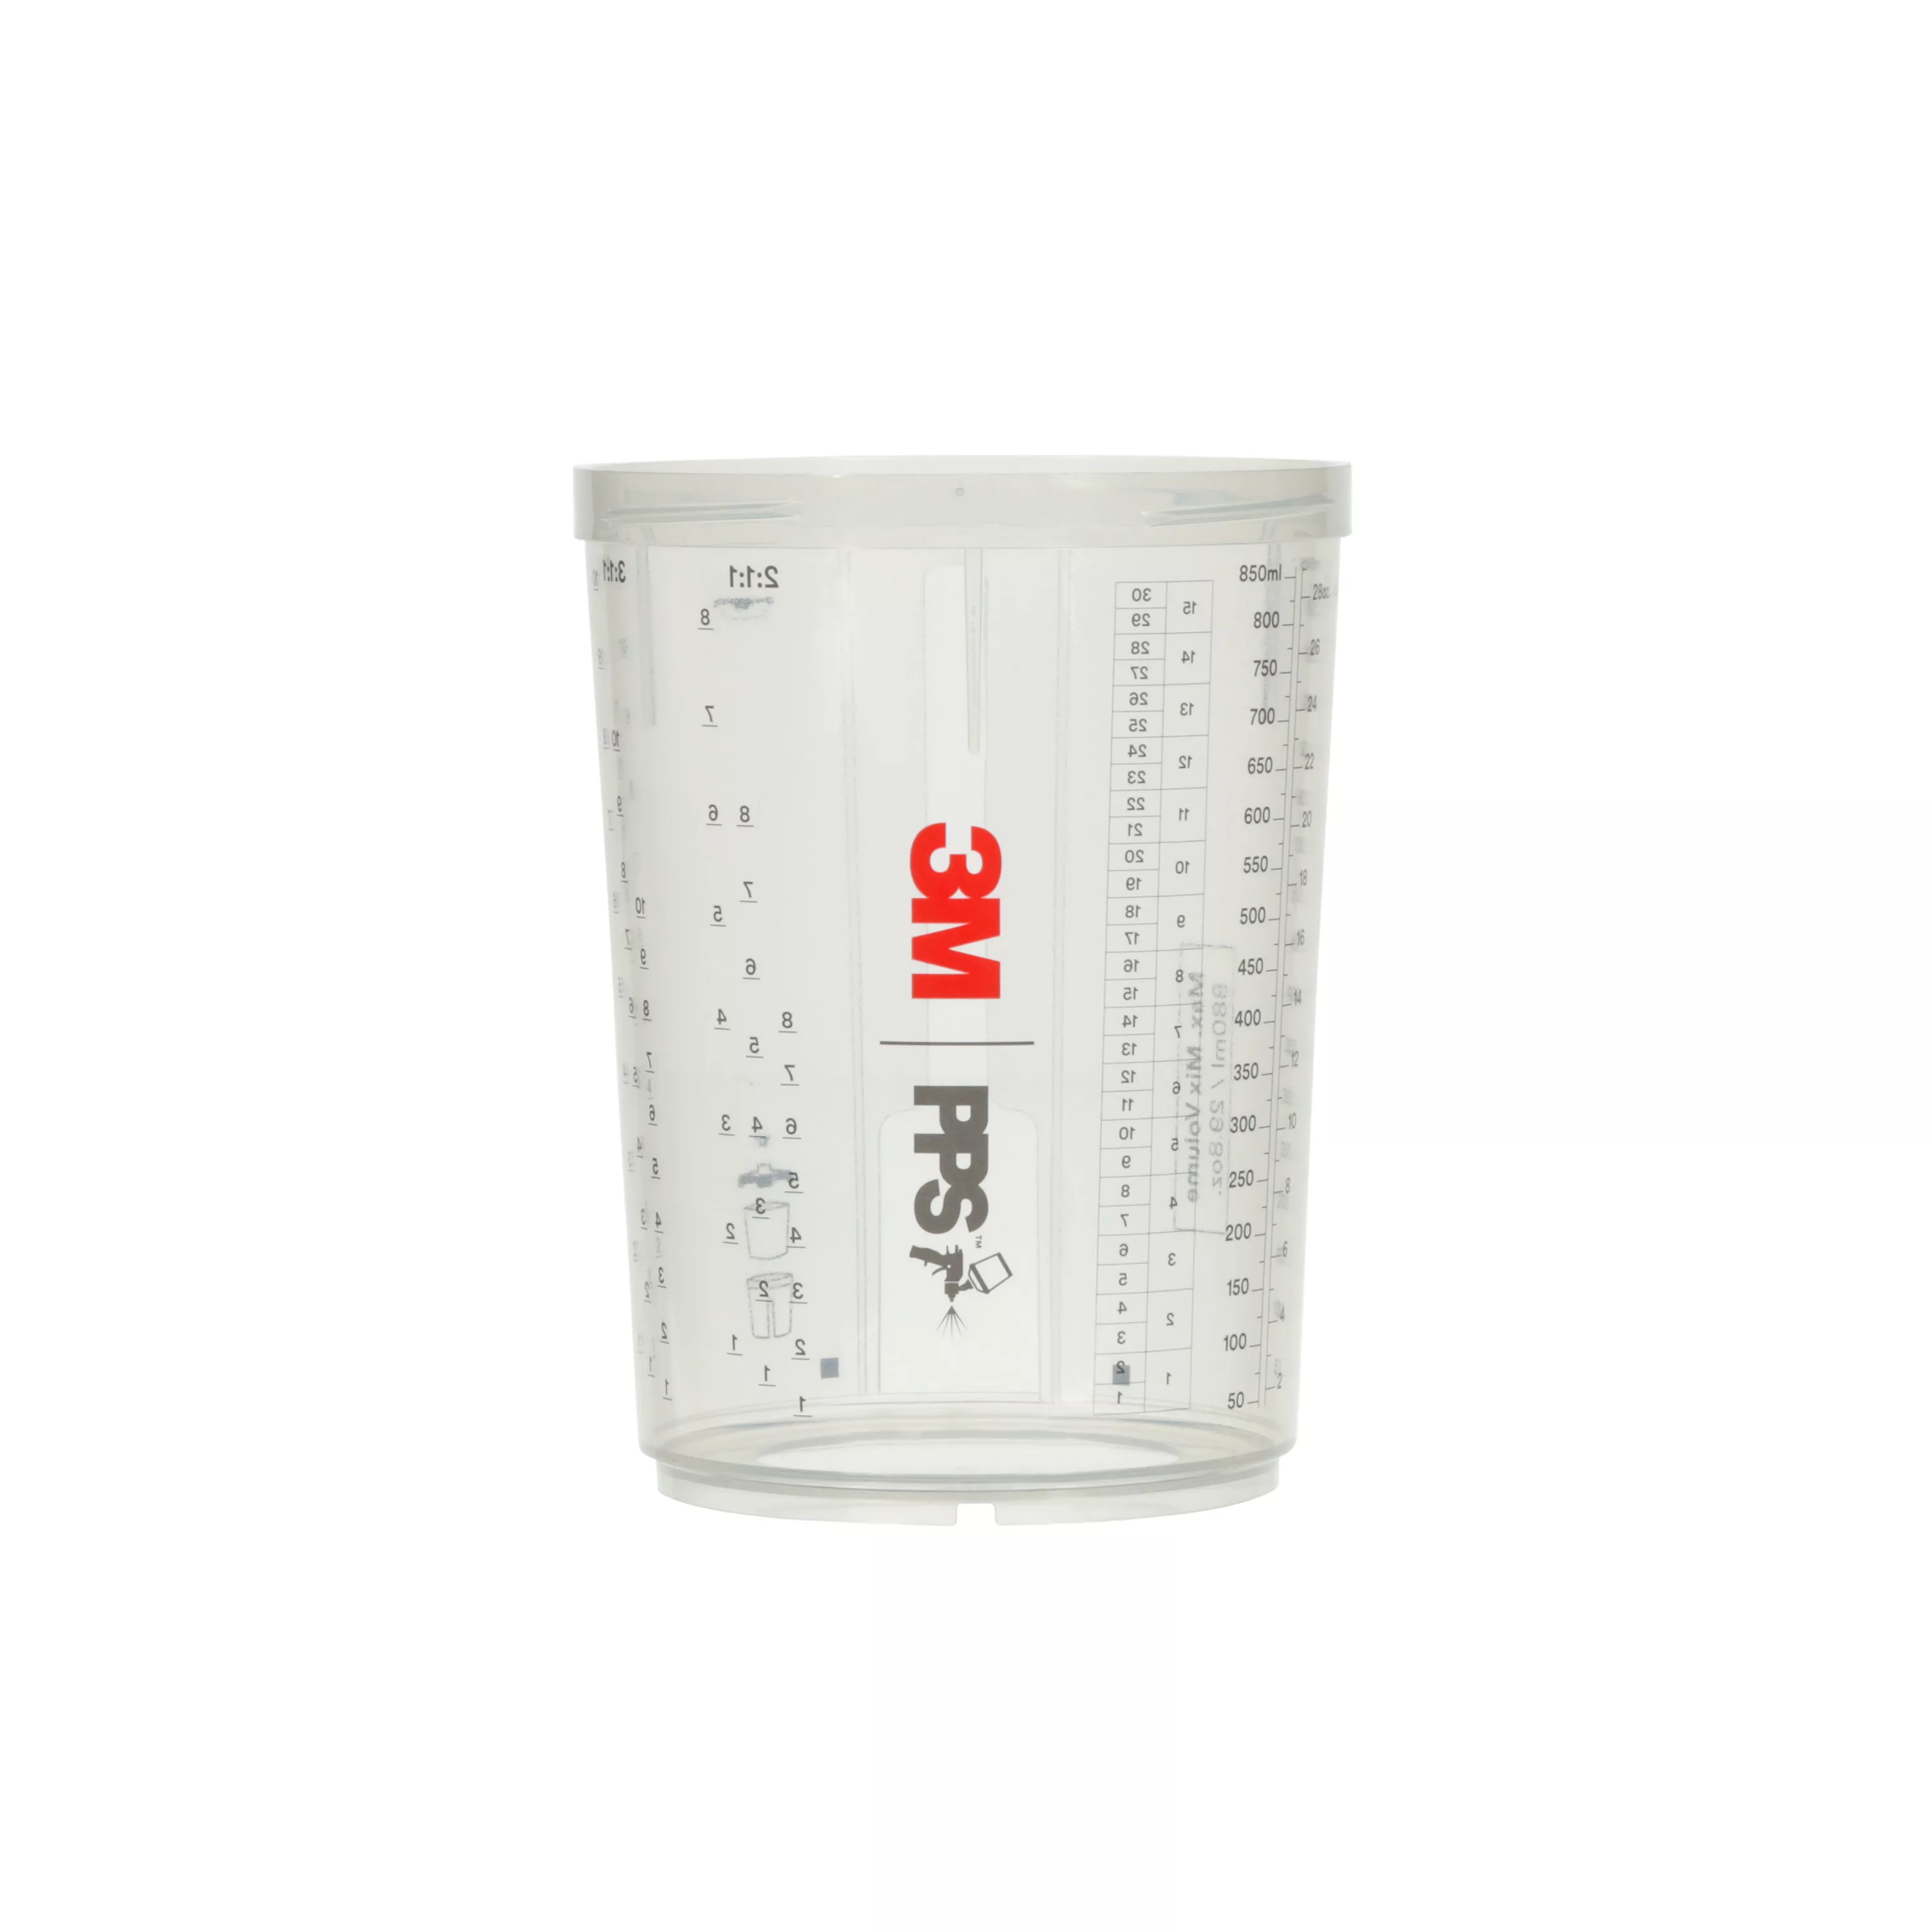 3M™ PPS™ Series 2.0 Cup 26023, Large (28 fl oz, 850 mL), 2 Cups/Carton, 4 Cartons/Case